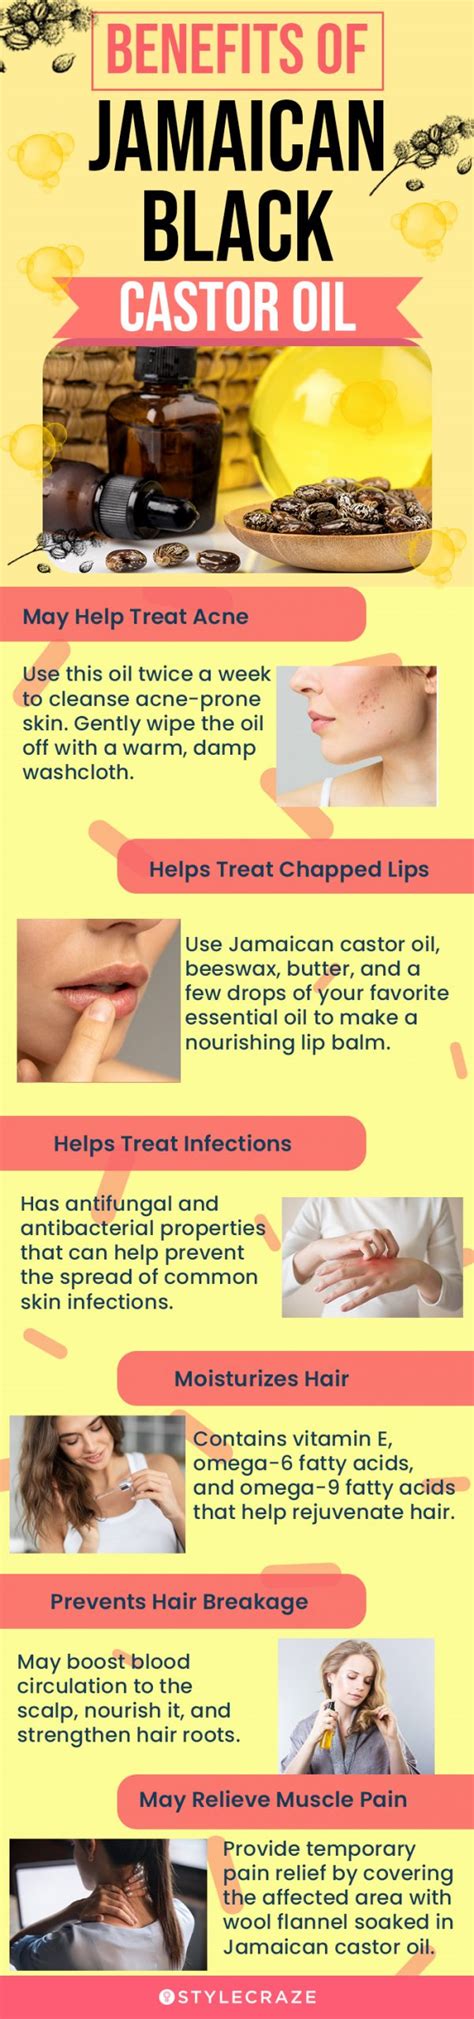 16 Unique Benefits Of Jamaican Black Castor Oil And Precautions